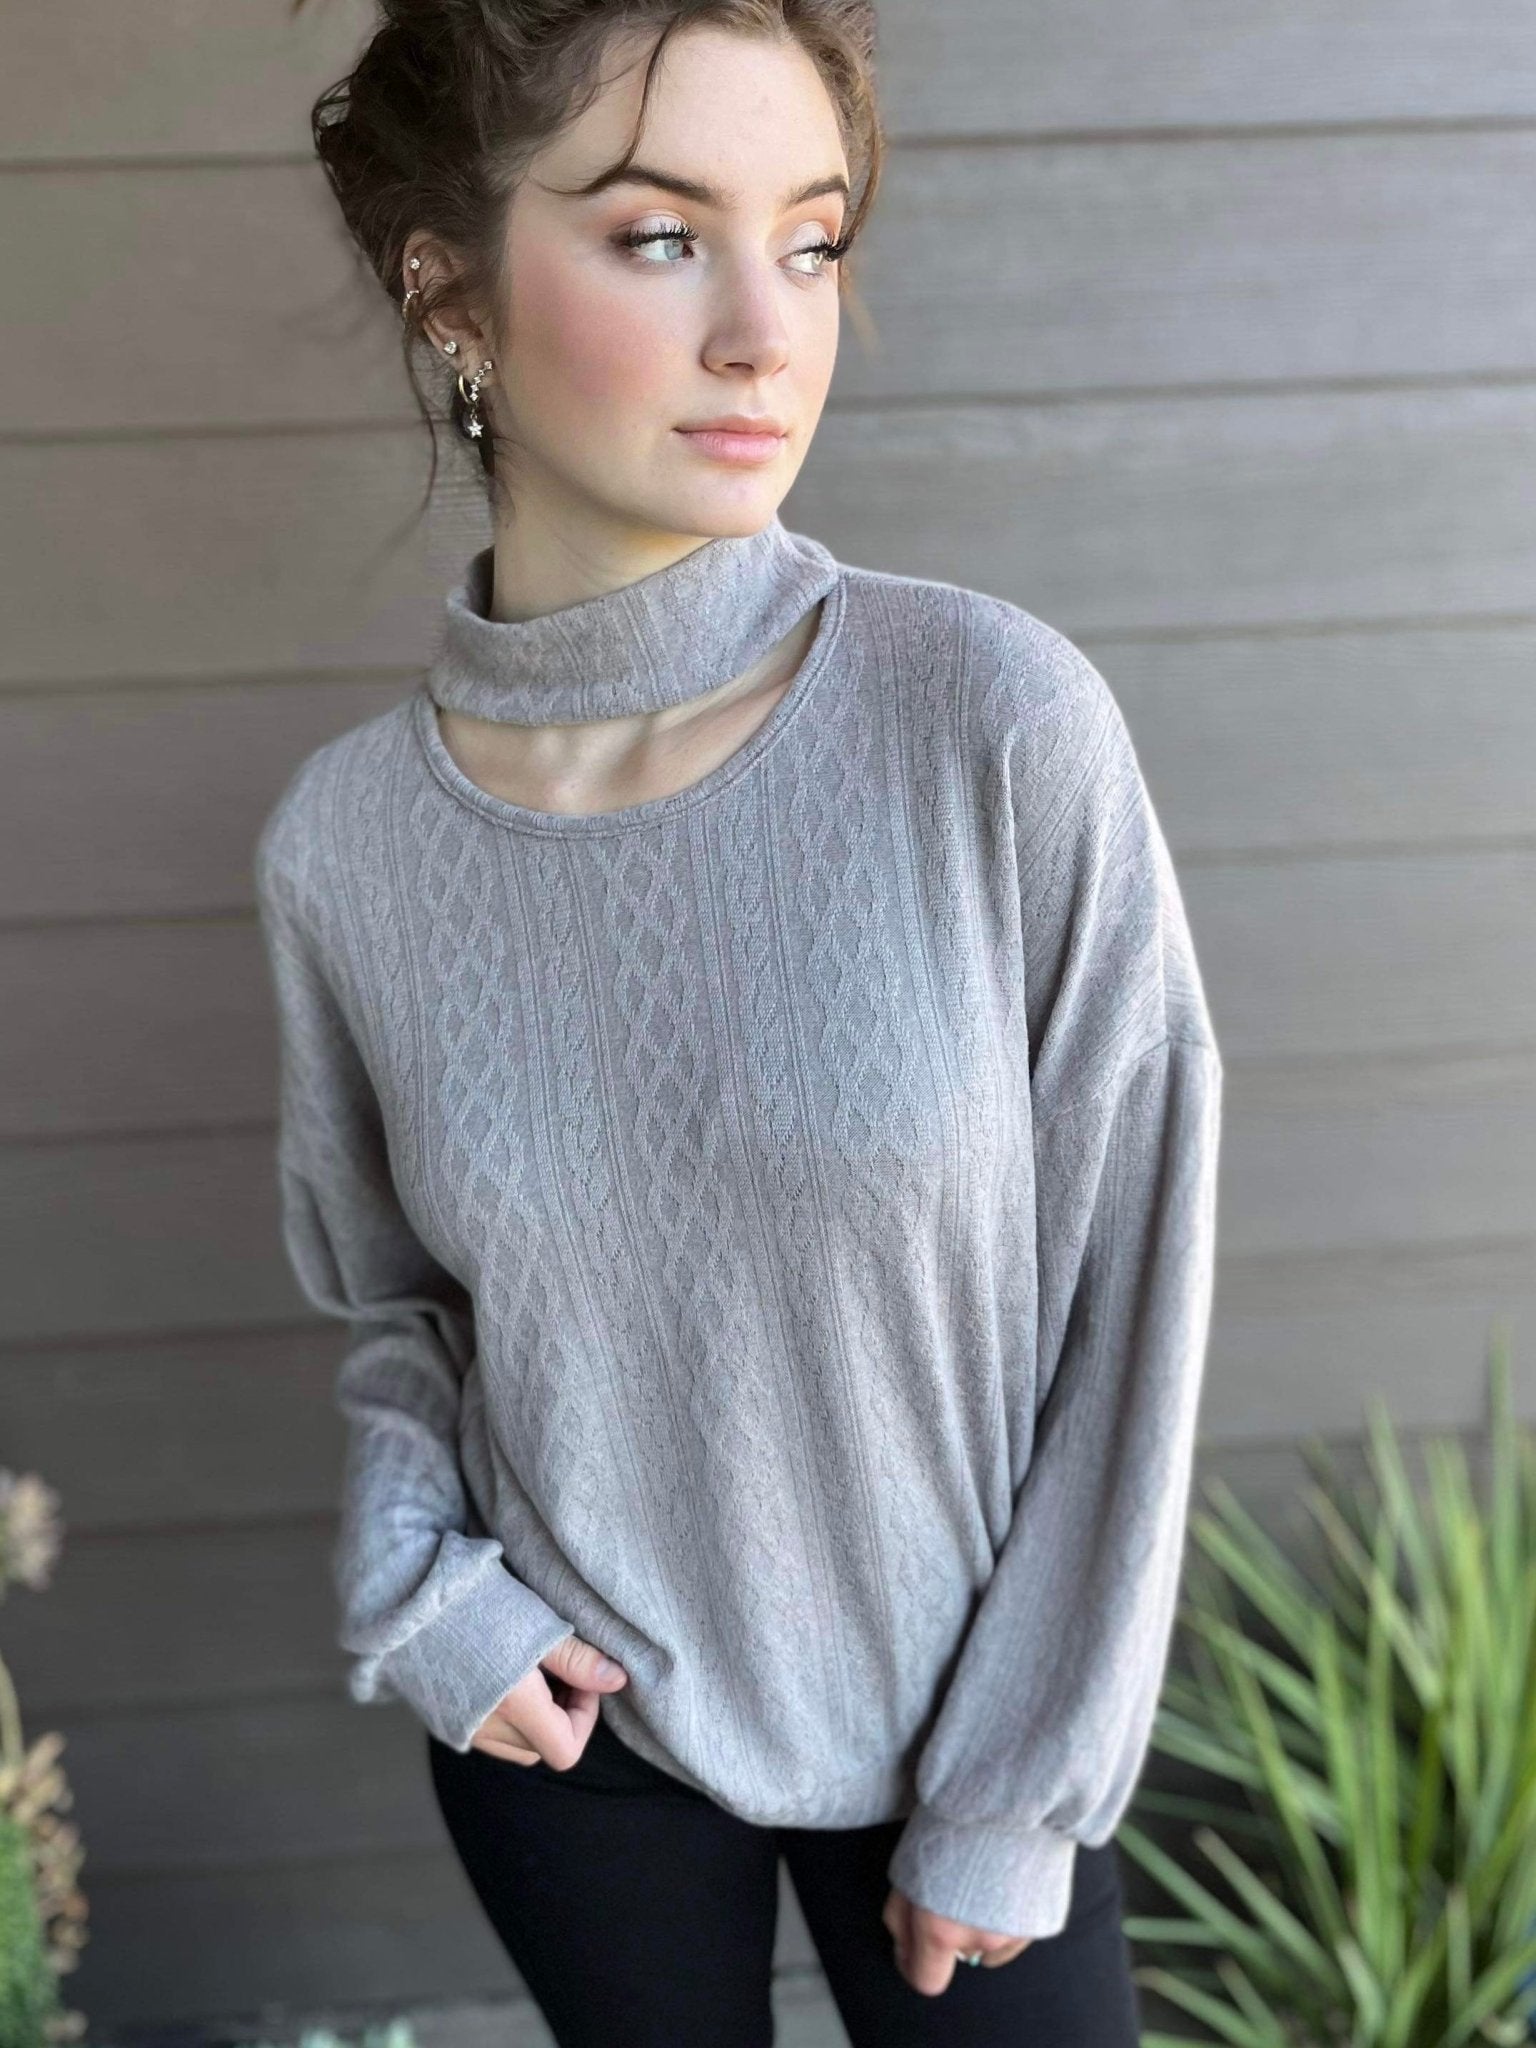 Roxy Choker Neck Sweater - Lavender Hills BeautySugarFox